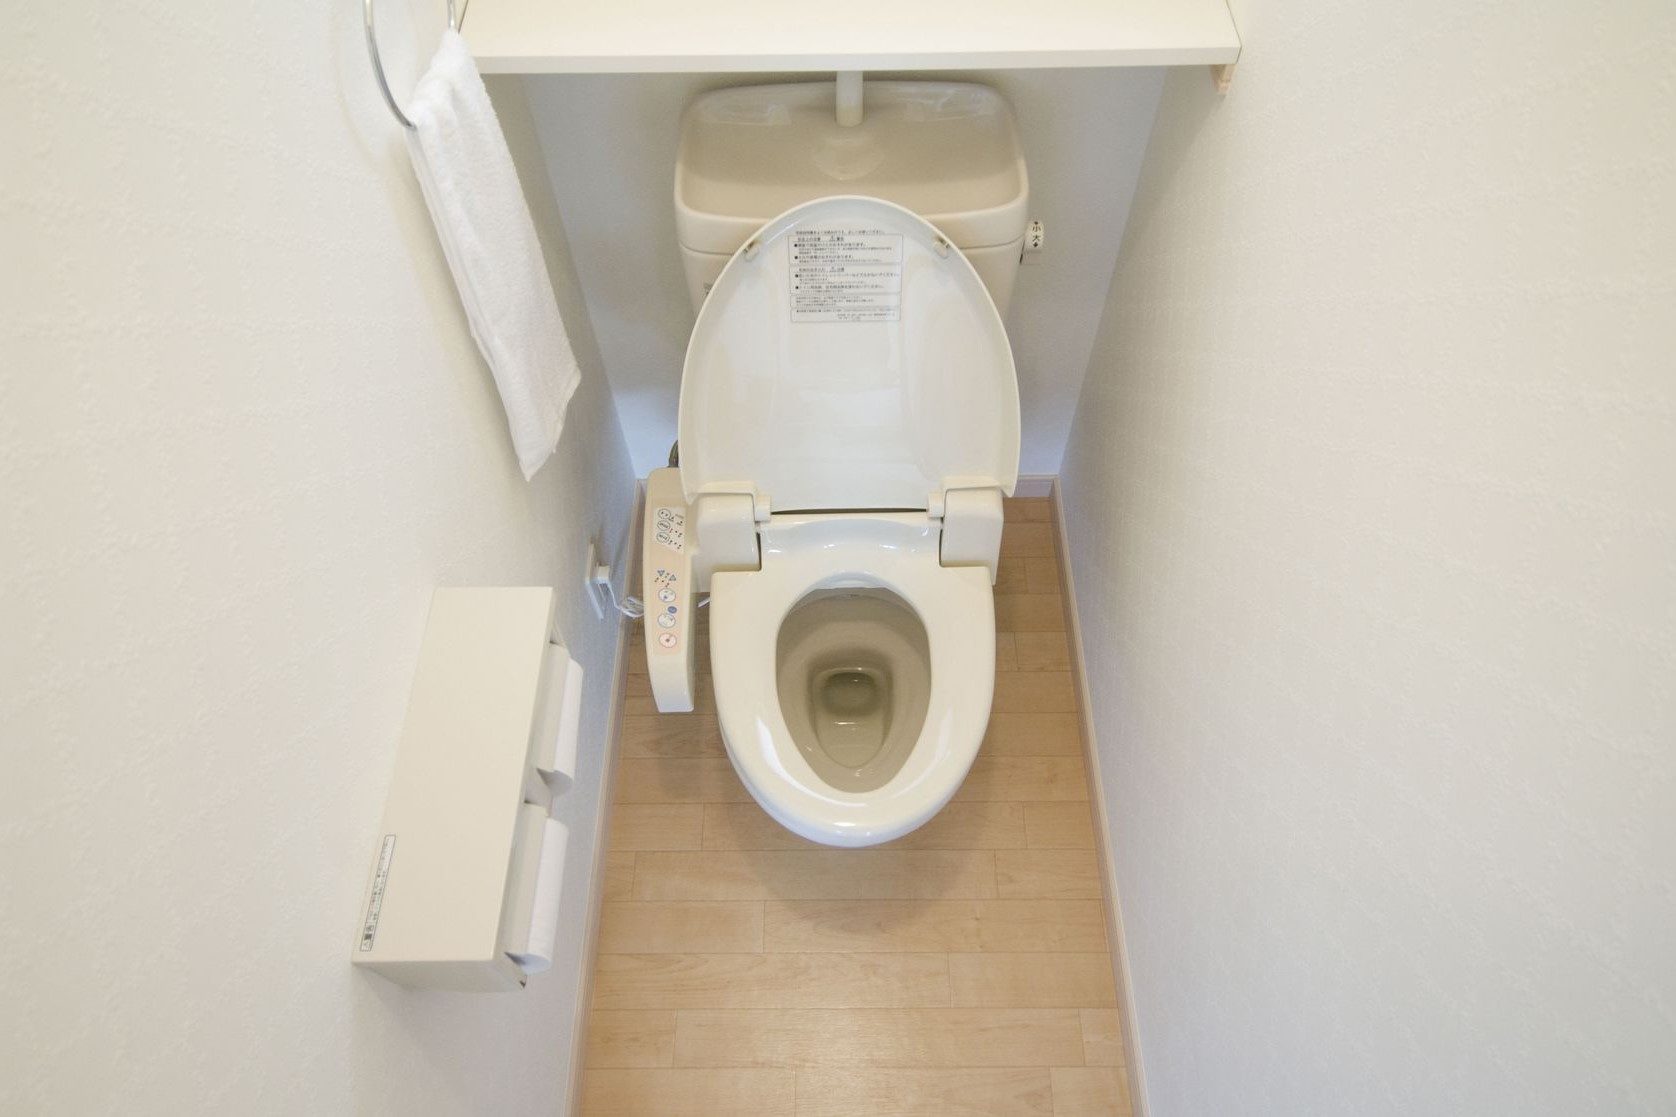 39743322 - toilet